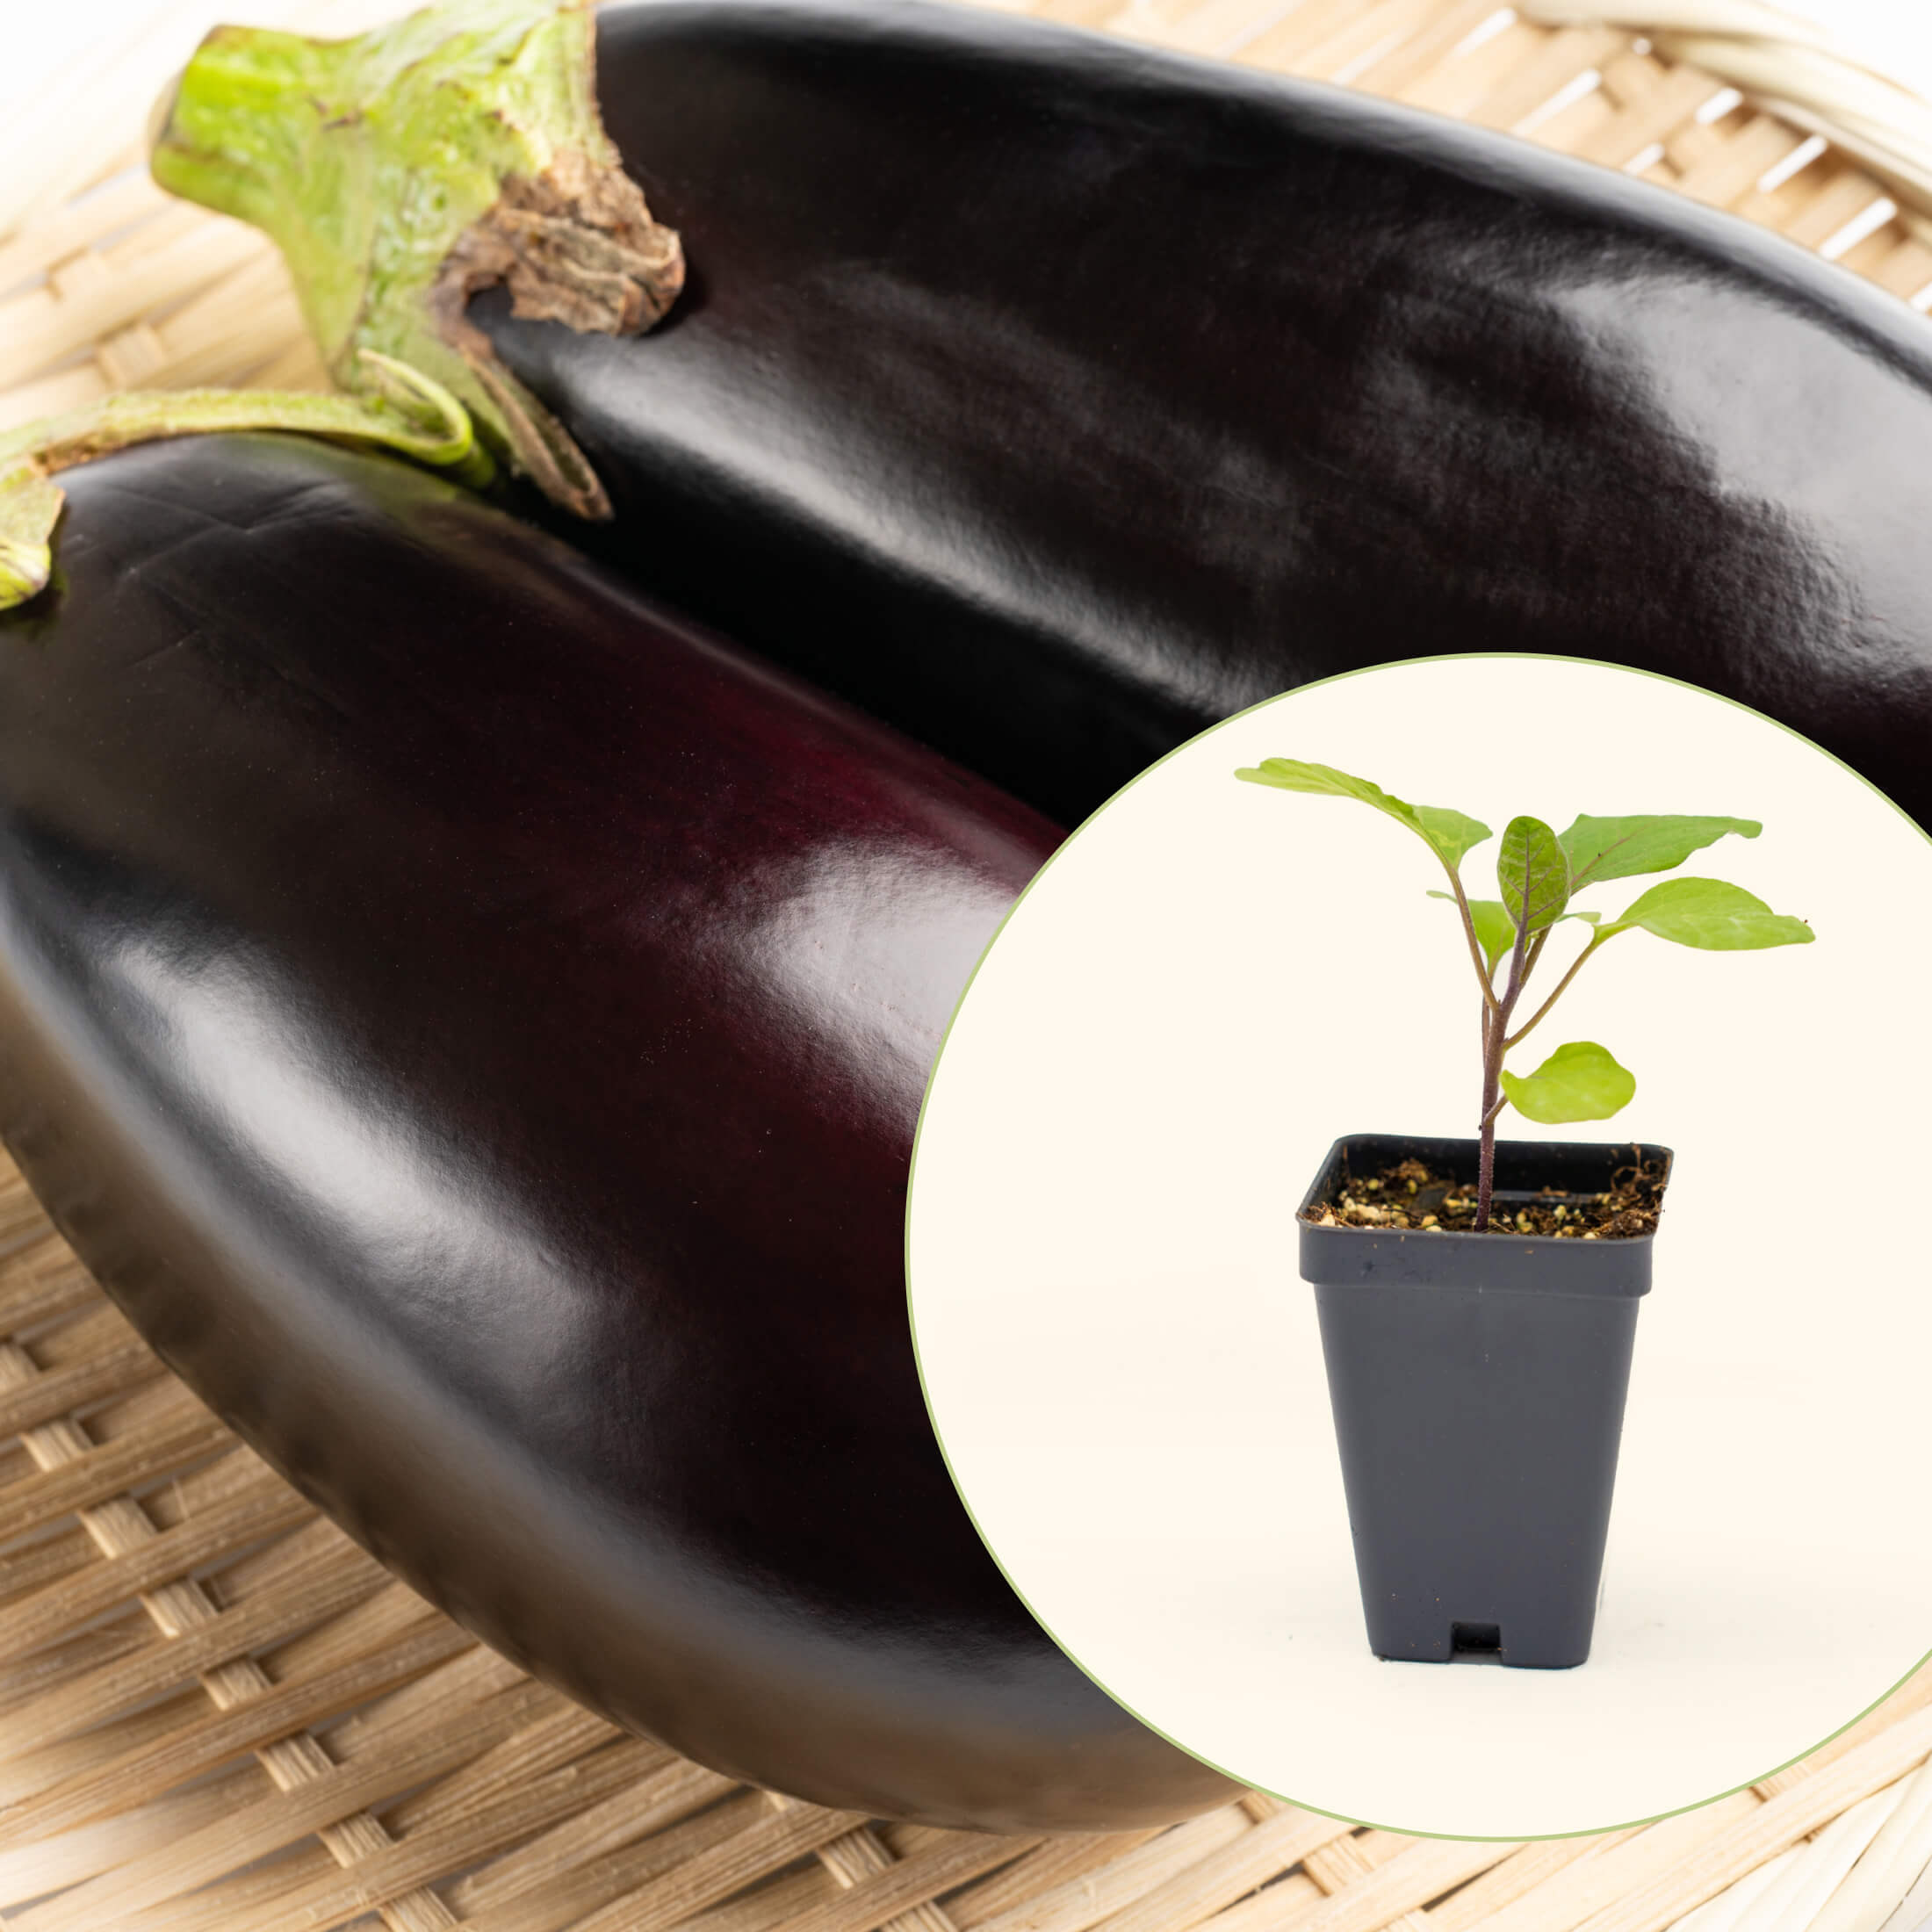 Black Beauty Eggplant Seedling